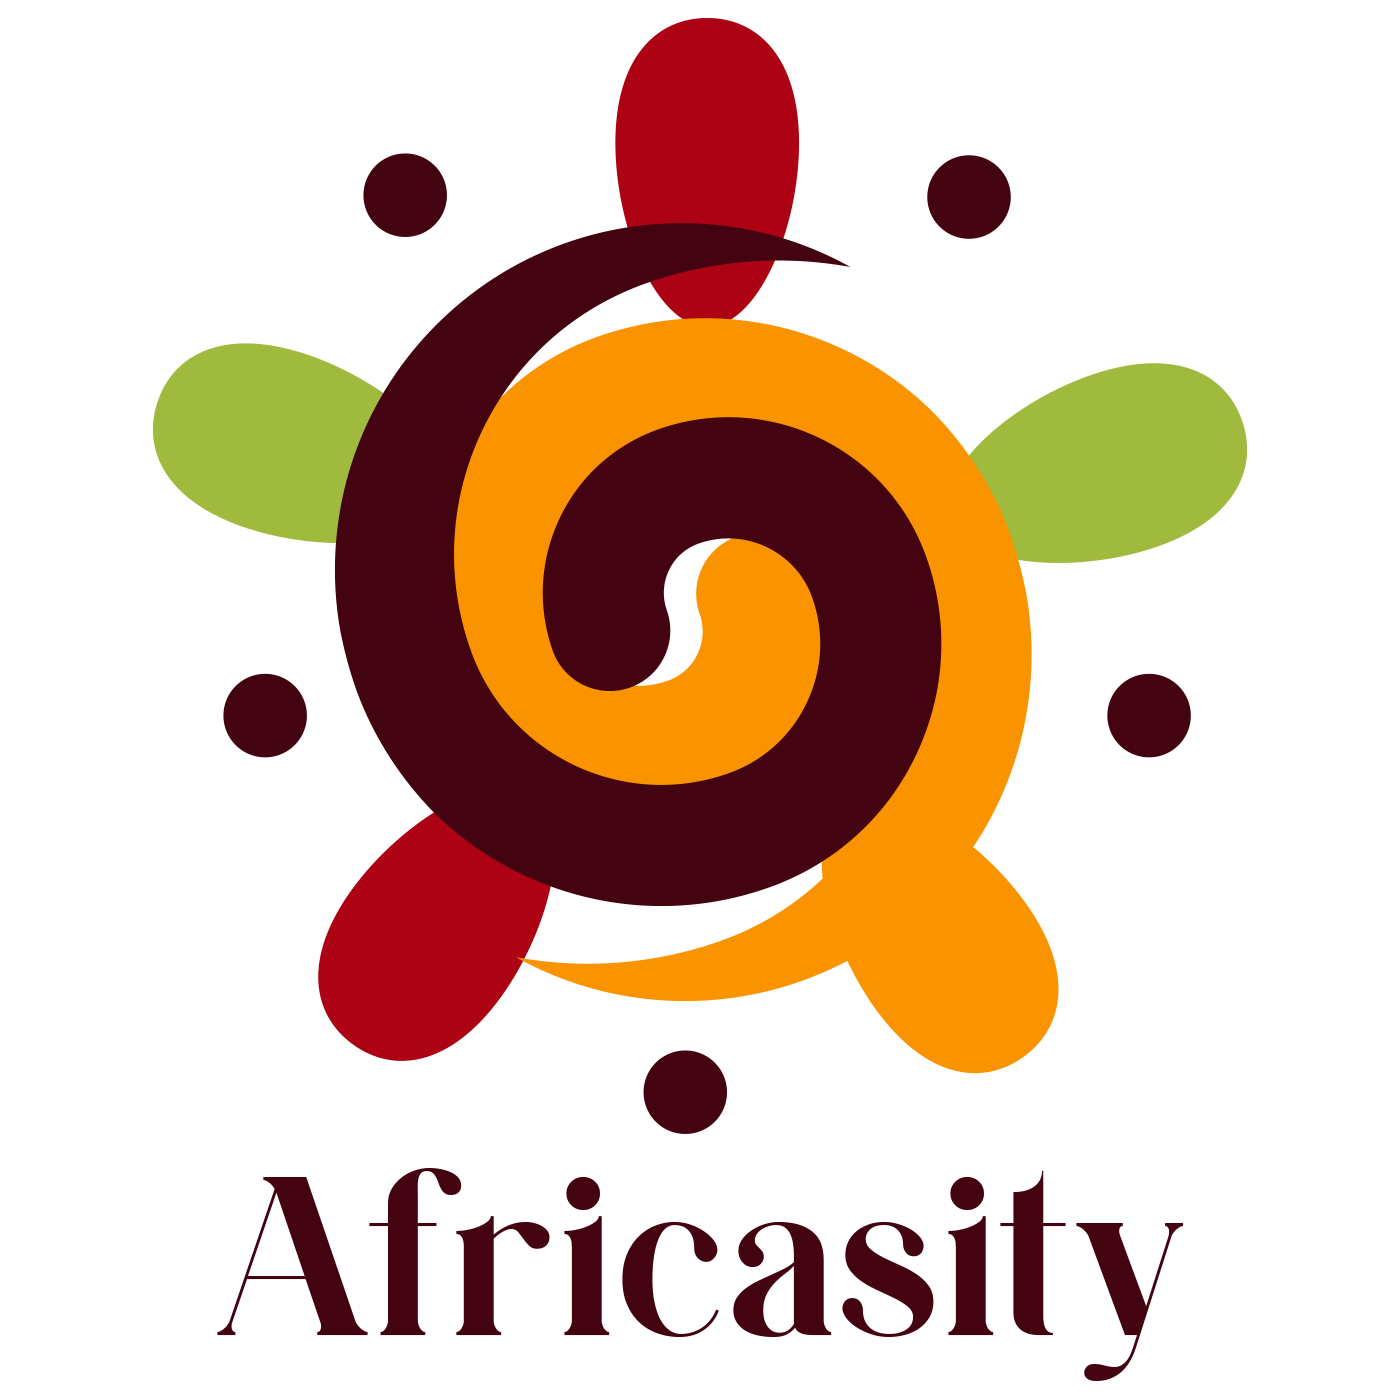 Africasity